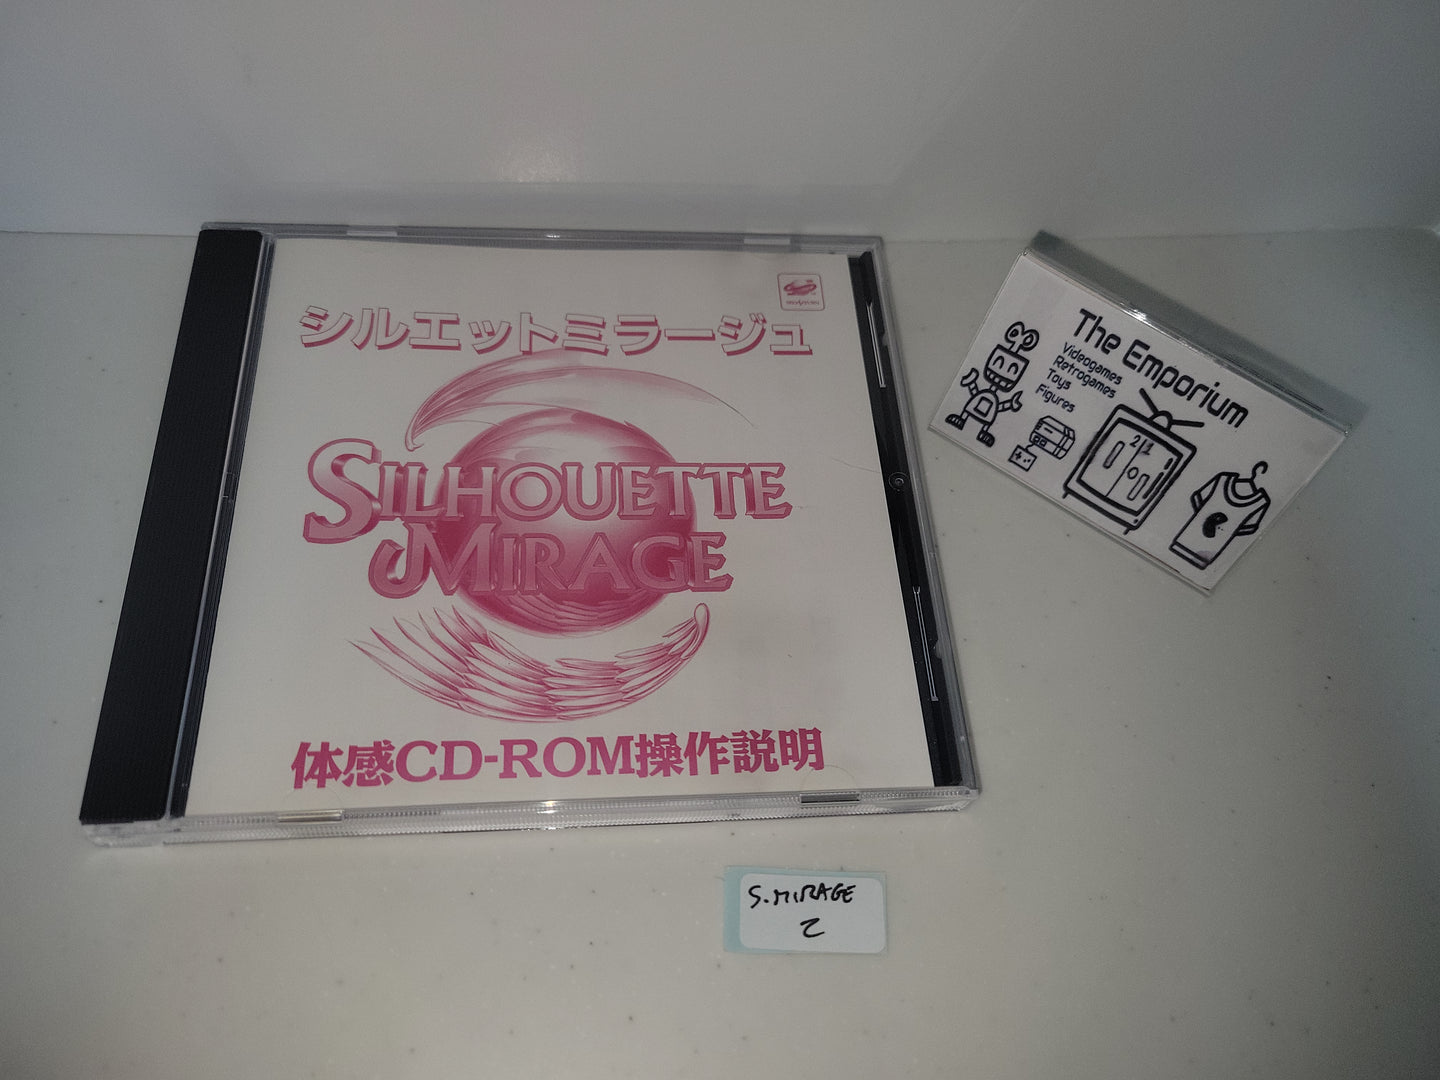 Silhouette Mirage Taikenban (Special Promotion Edition) - Sega Saturn sat stn